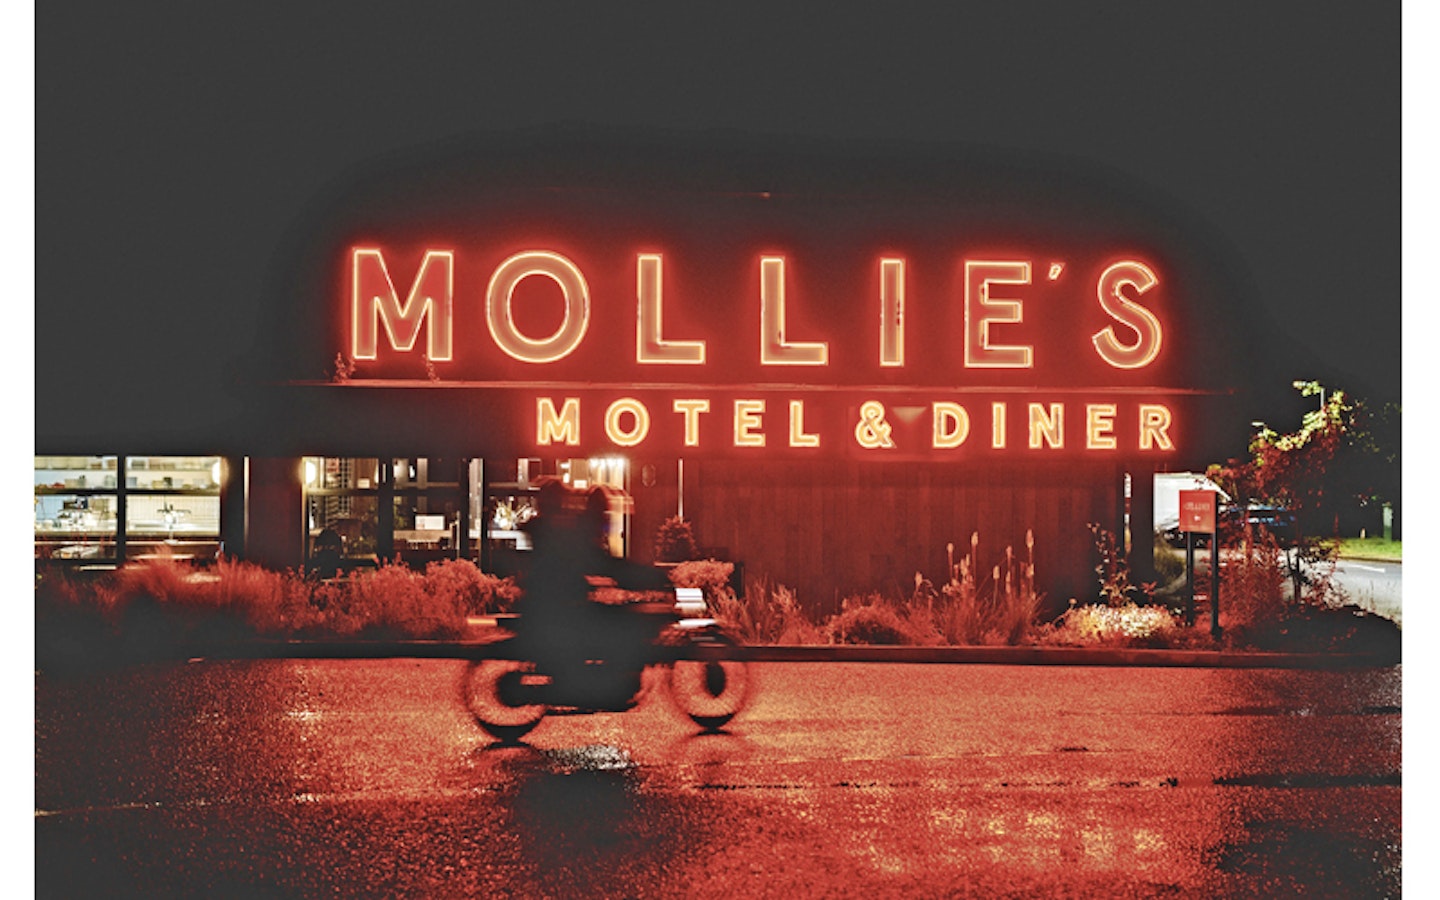 Marvellous motels